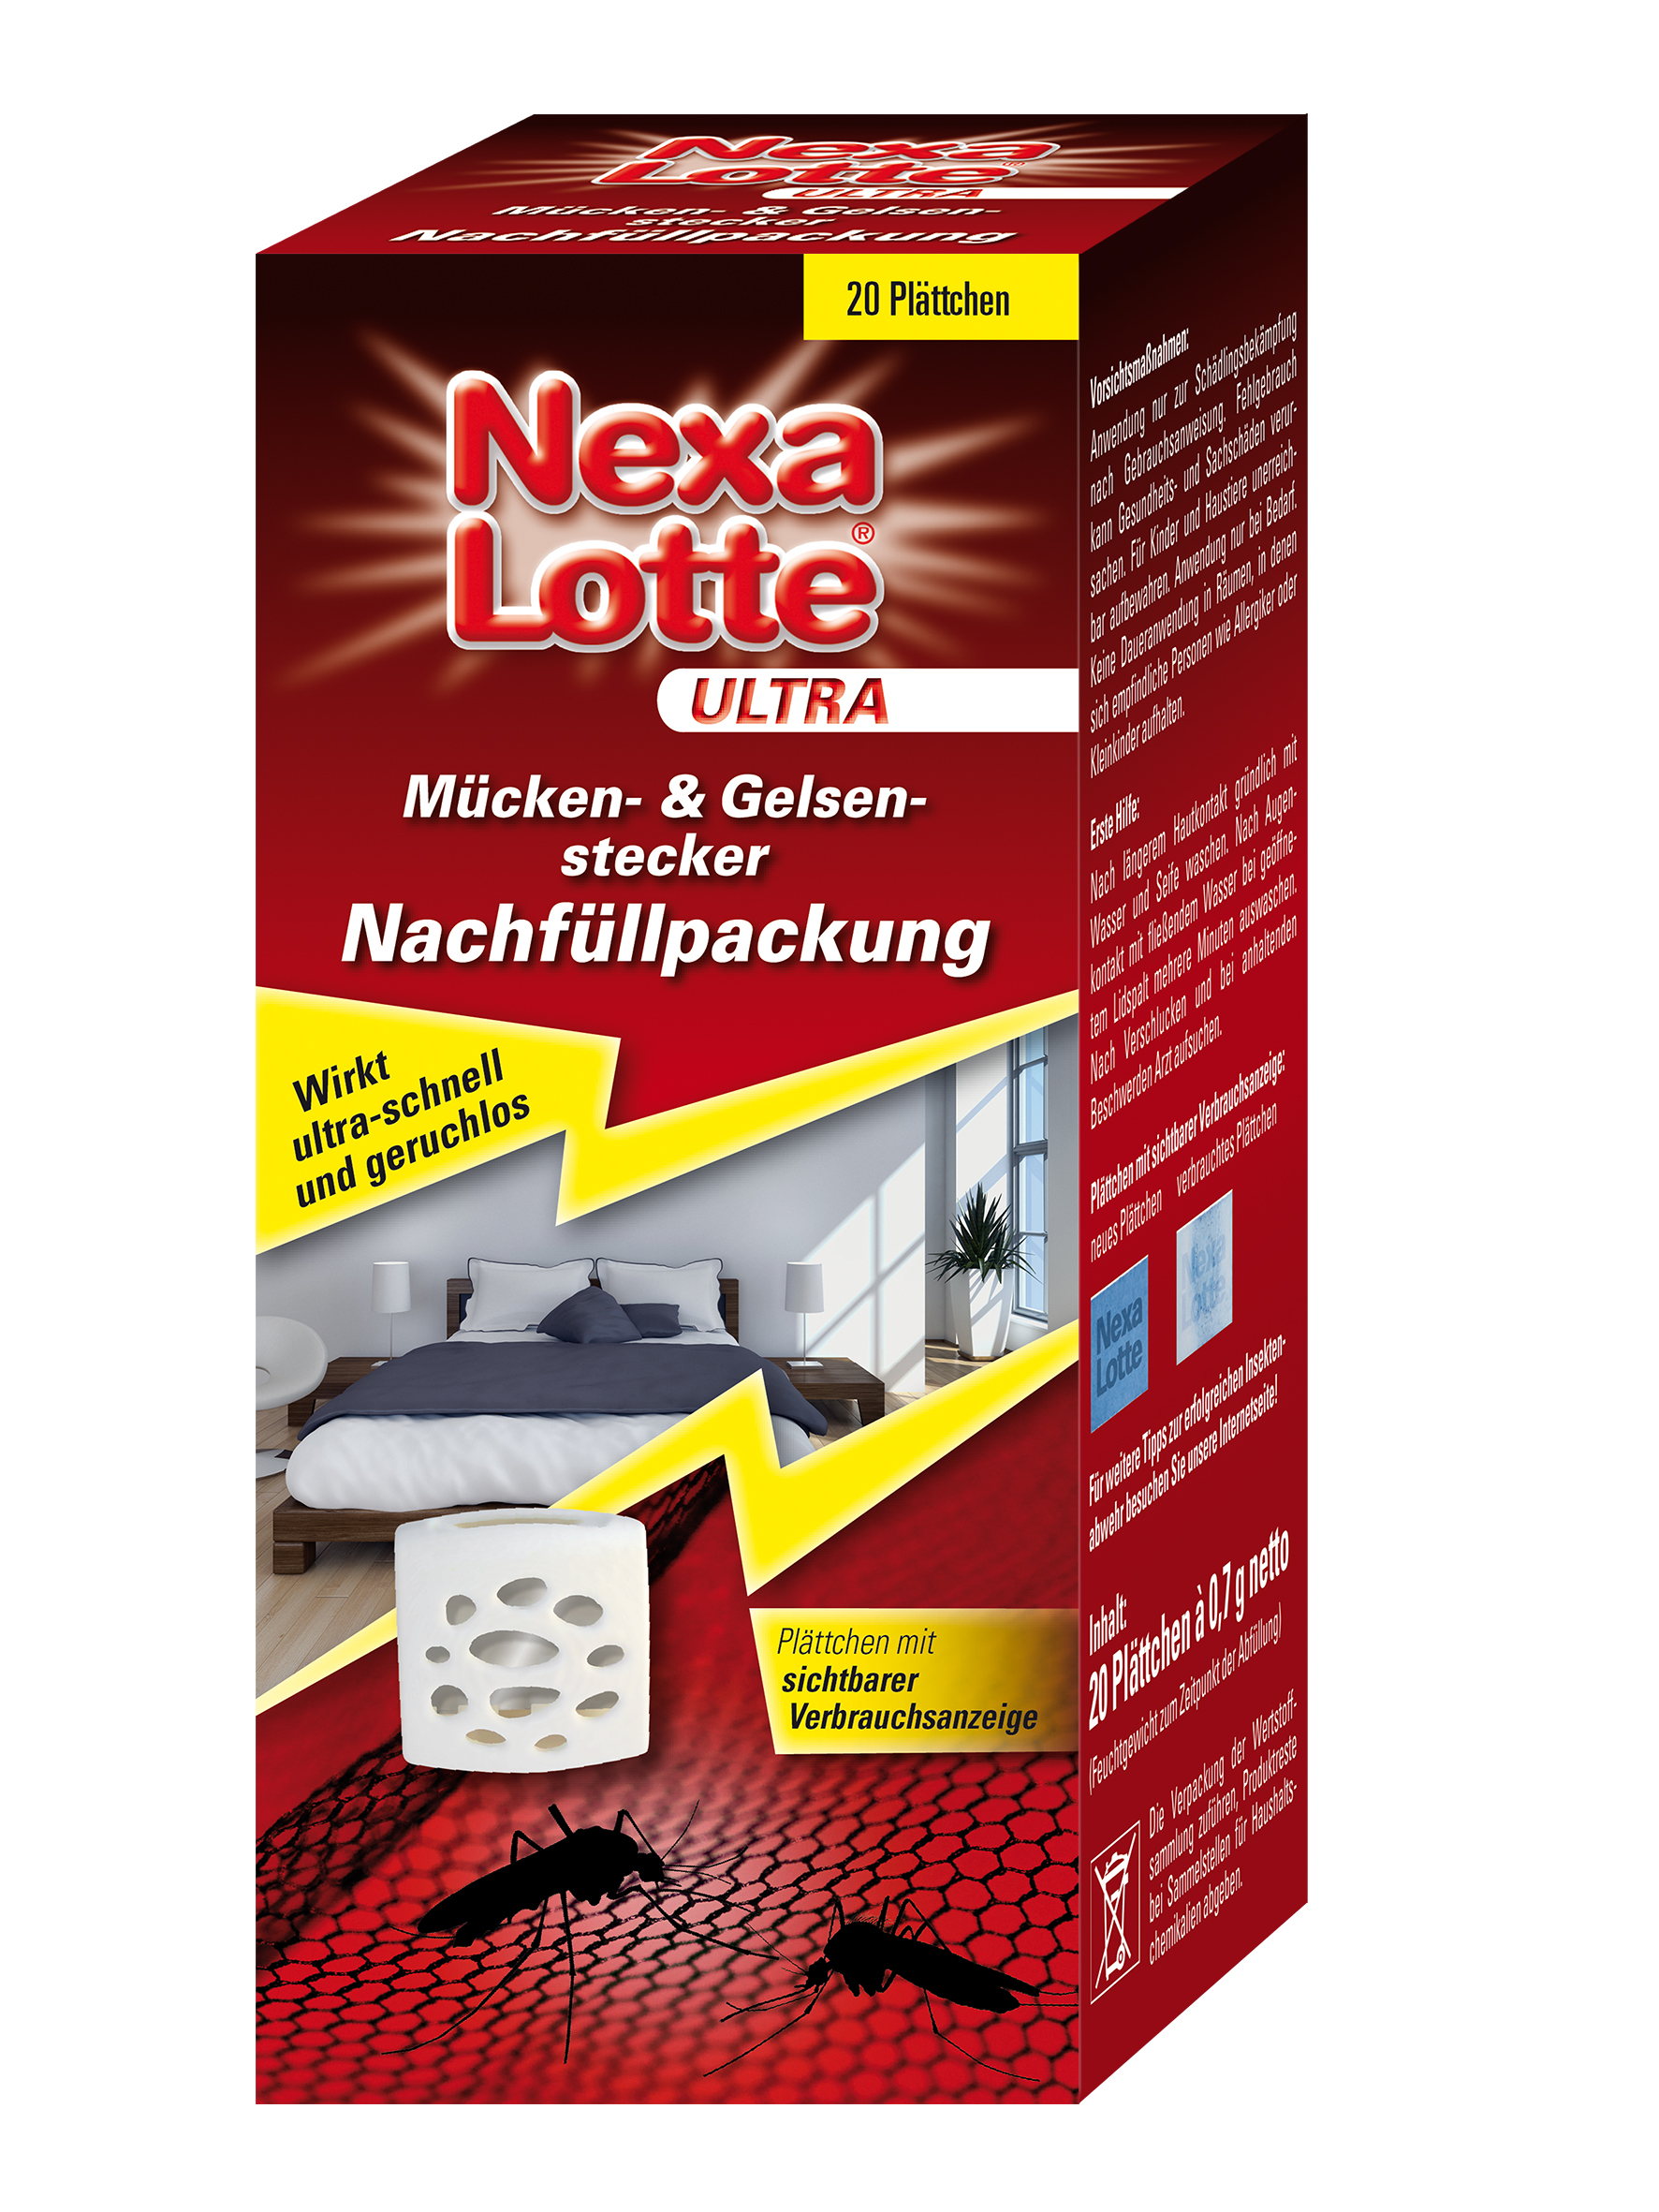 Nexa Lotte Ultra Mücken- & Gelsenstecker Nachfüllpackung